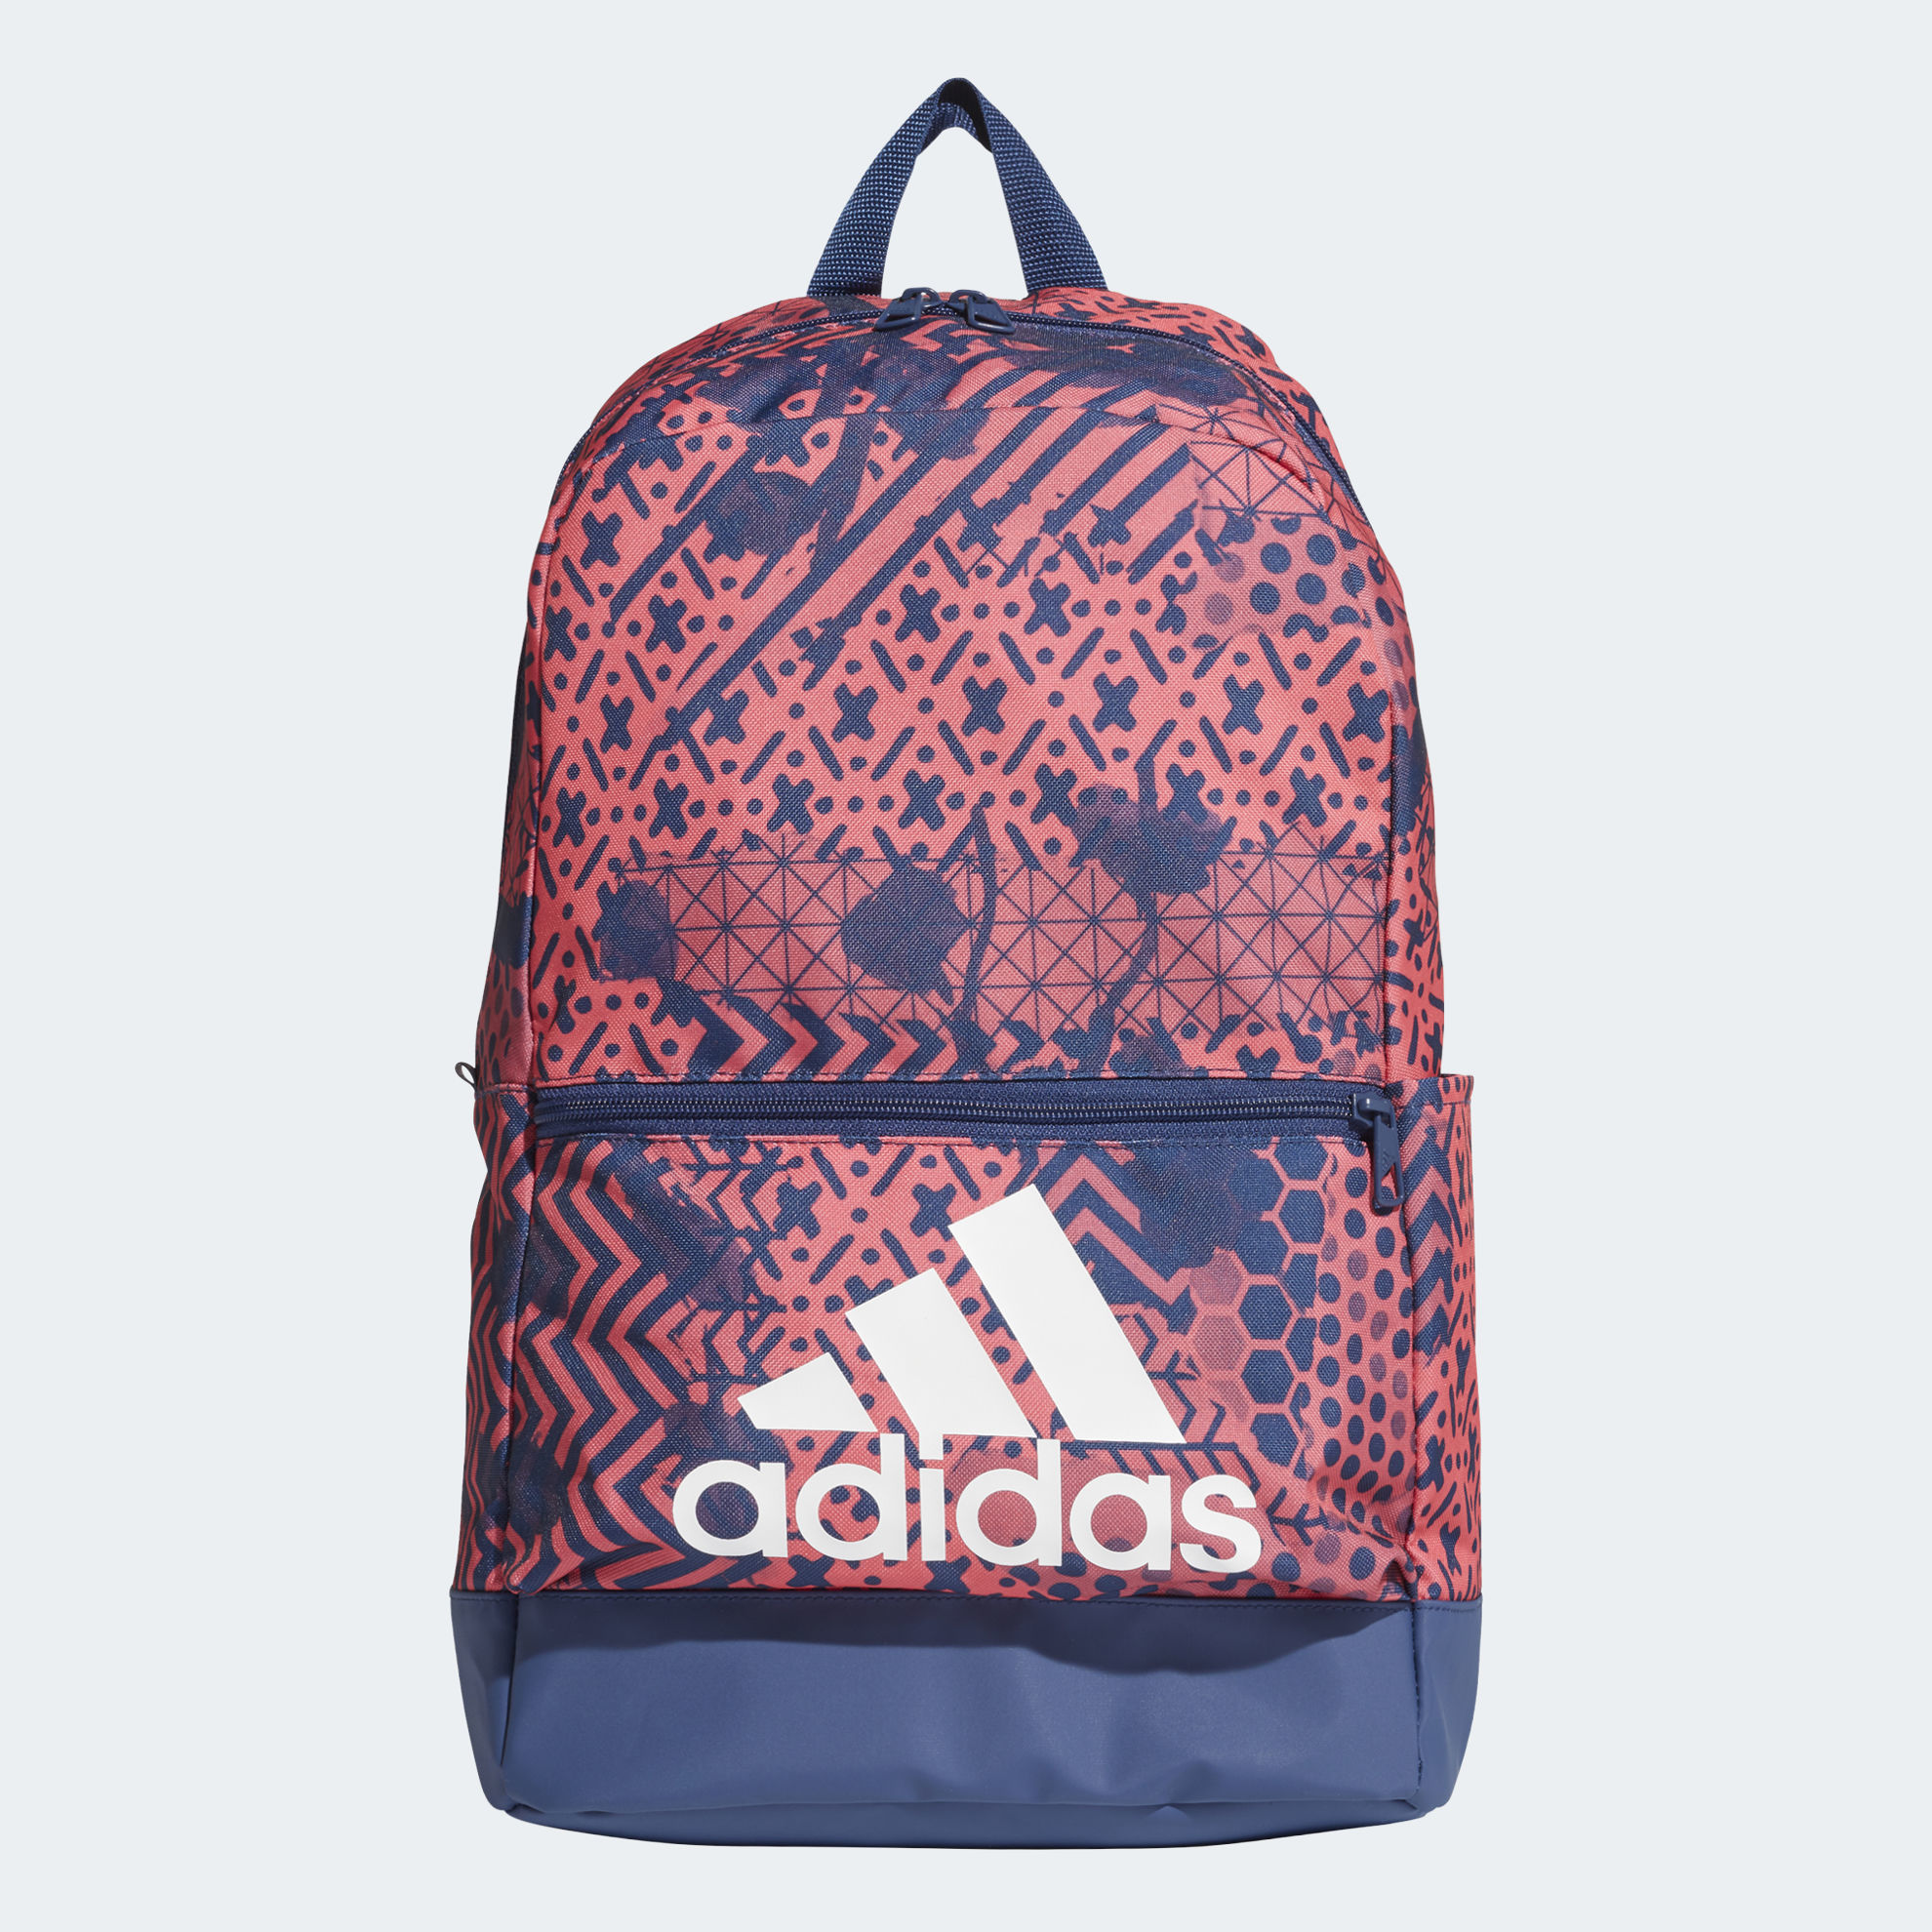 adidas prime weave backpack